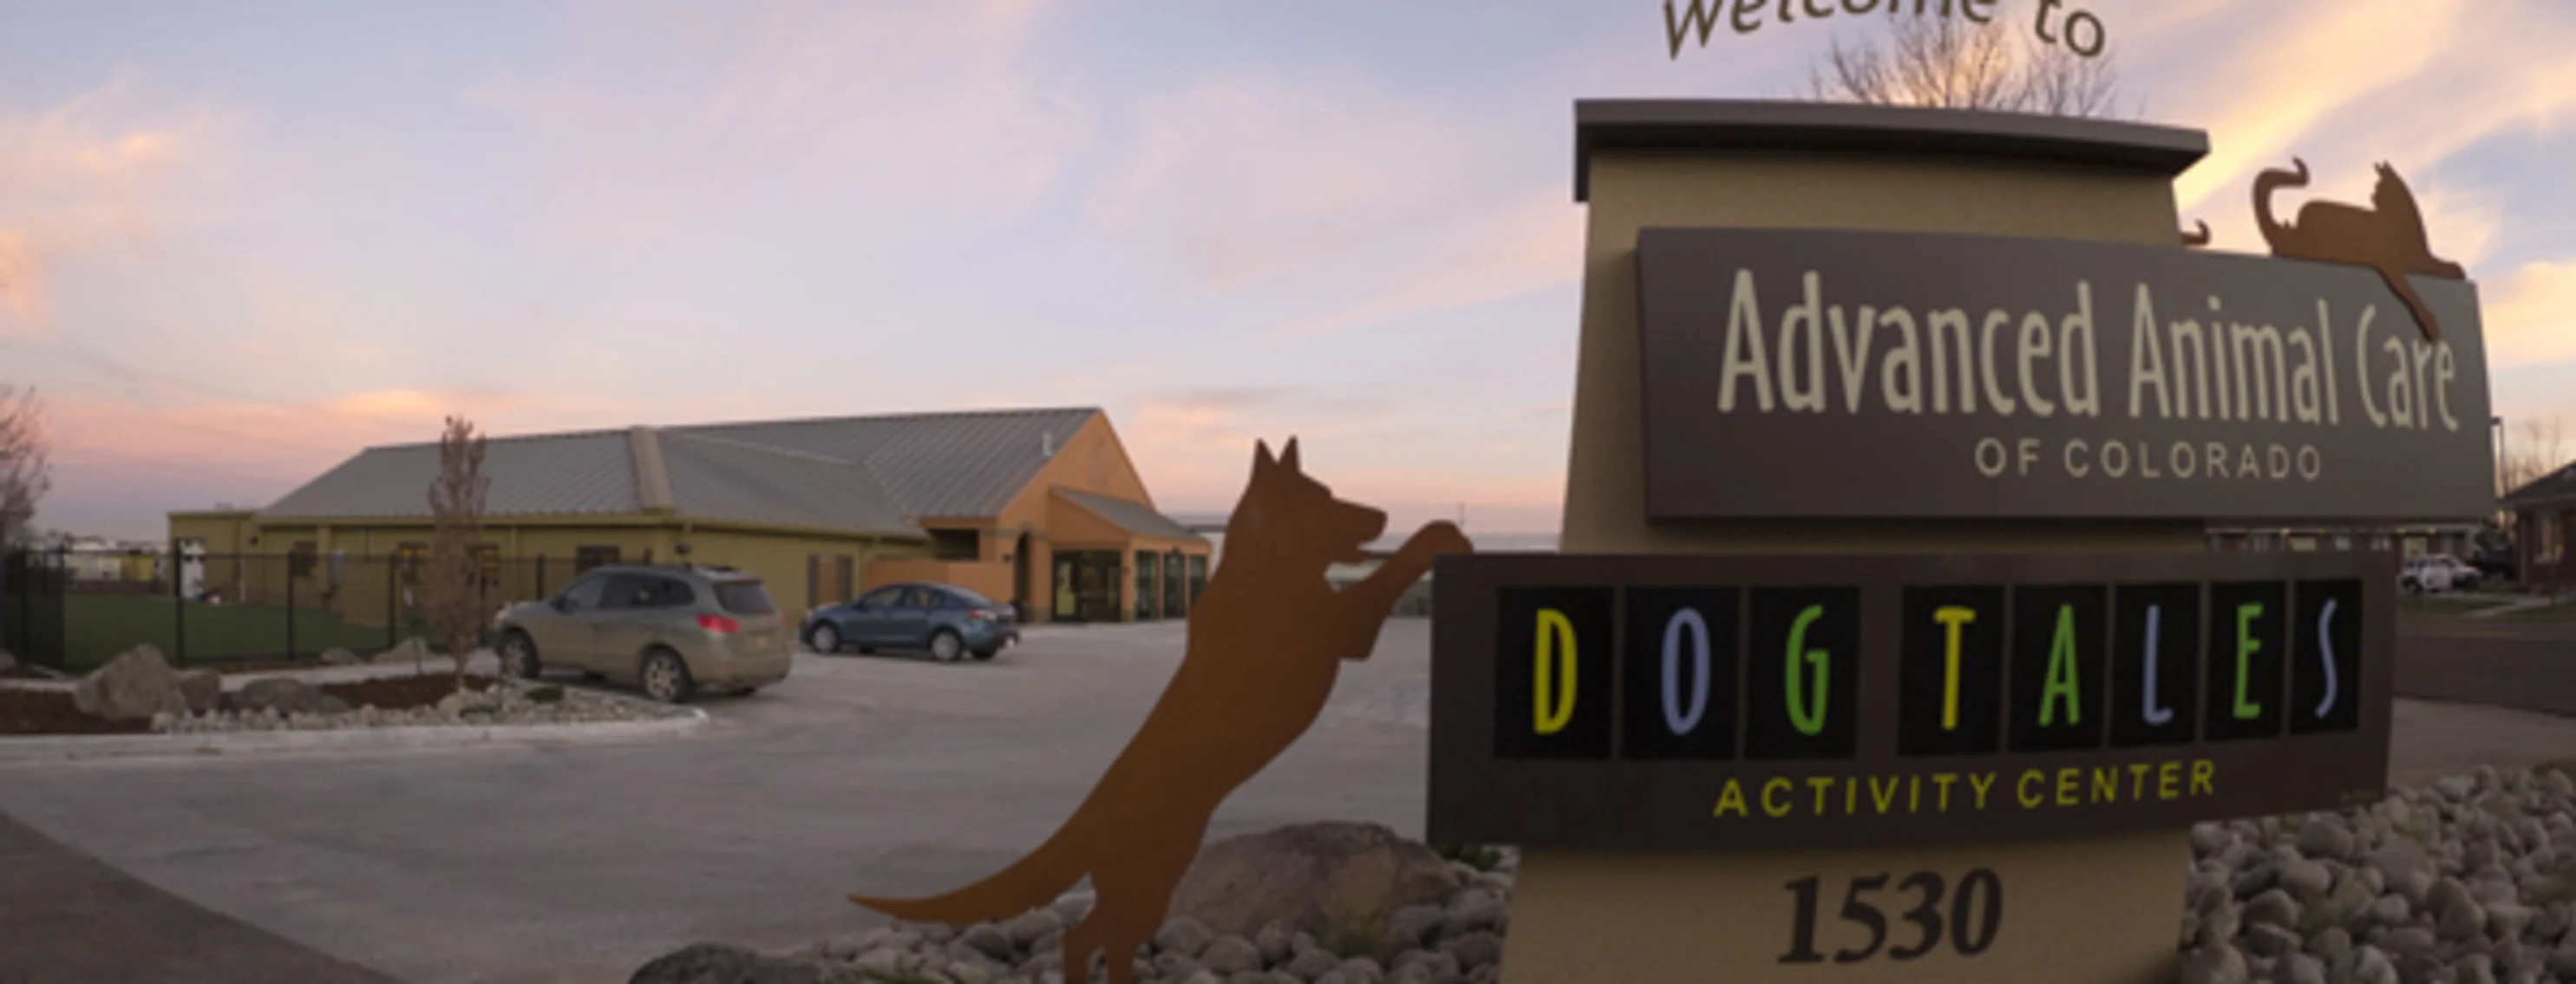 Exterior of Advanced Animal Care of Colorado